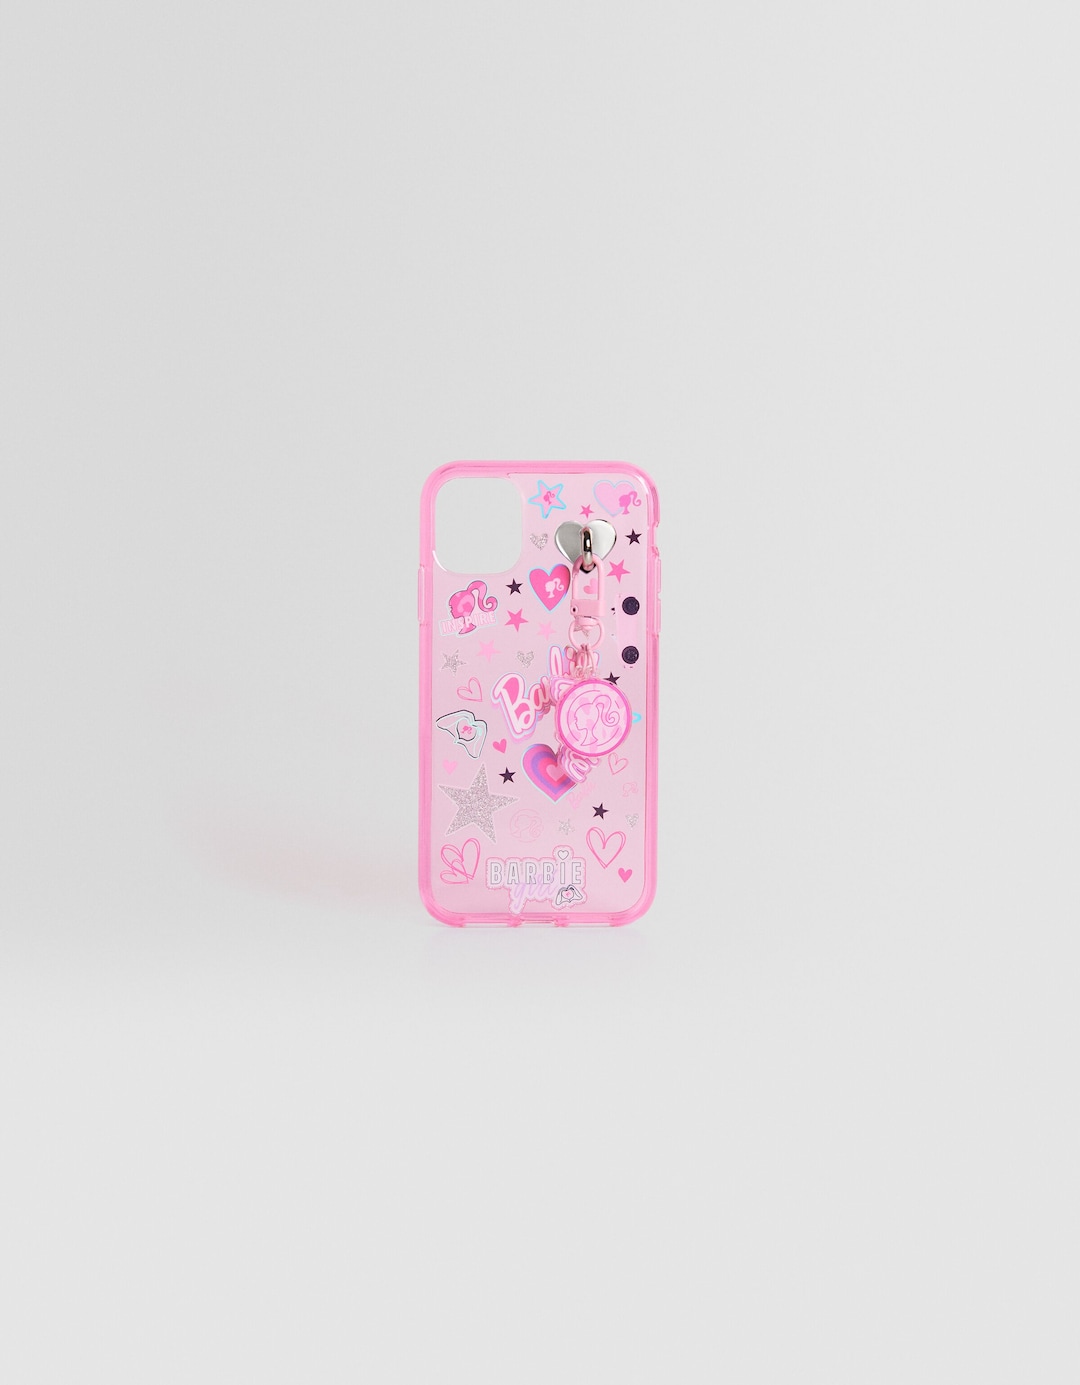 Carcassa mòbil iPhone Barbie charms